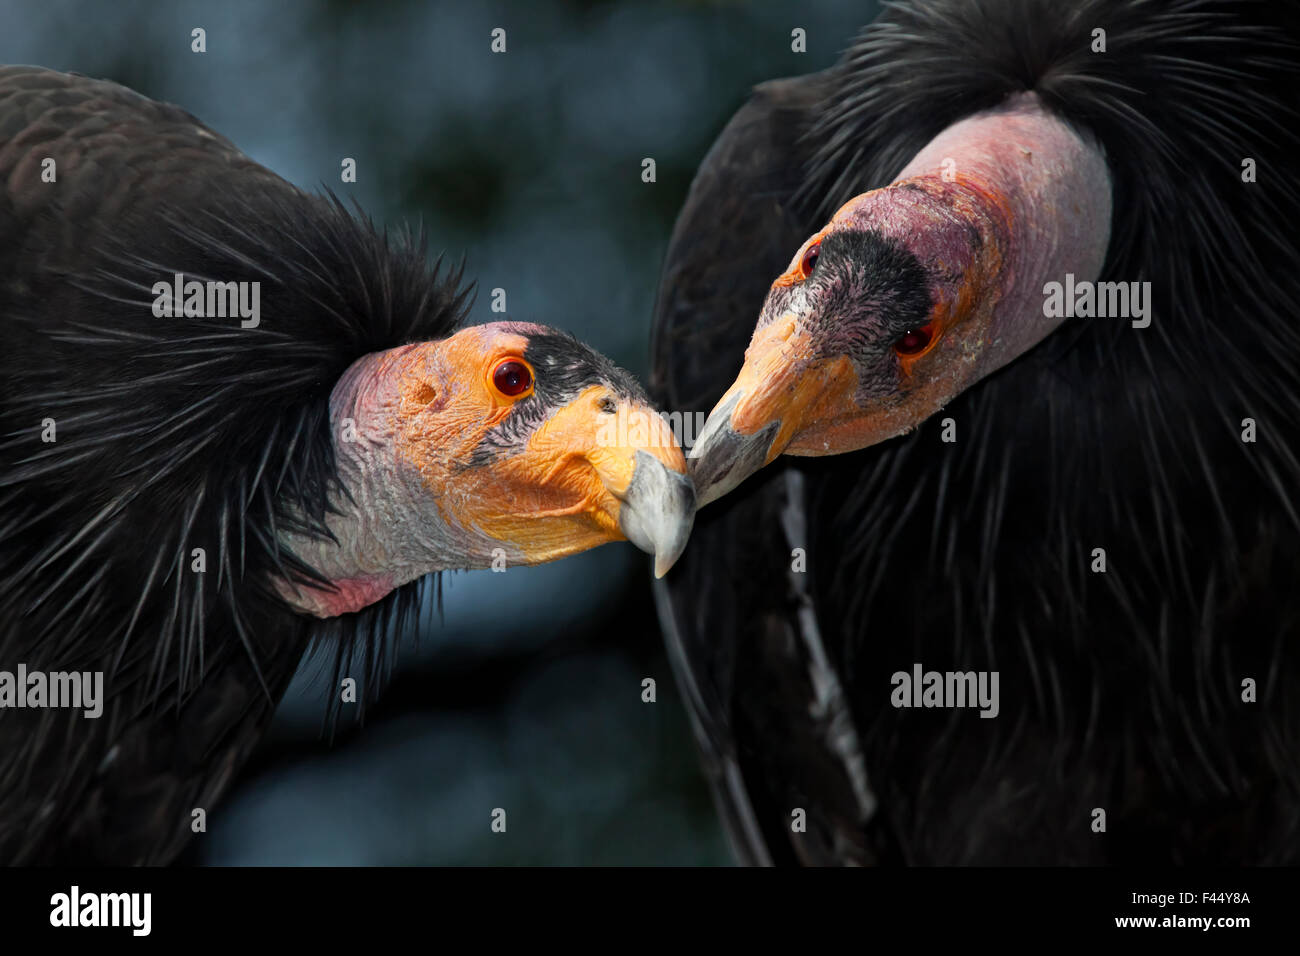 California condors (Gymnnogyps californicus) interacting. Captive. Endangered species. Stock Photo